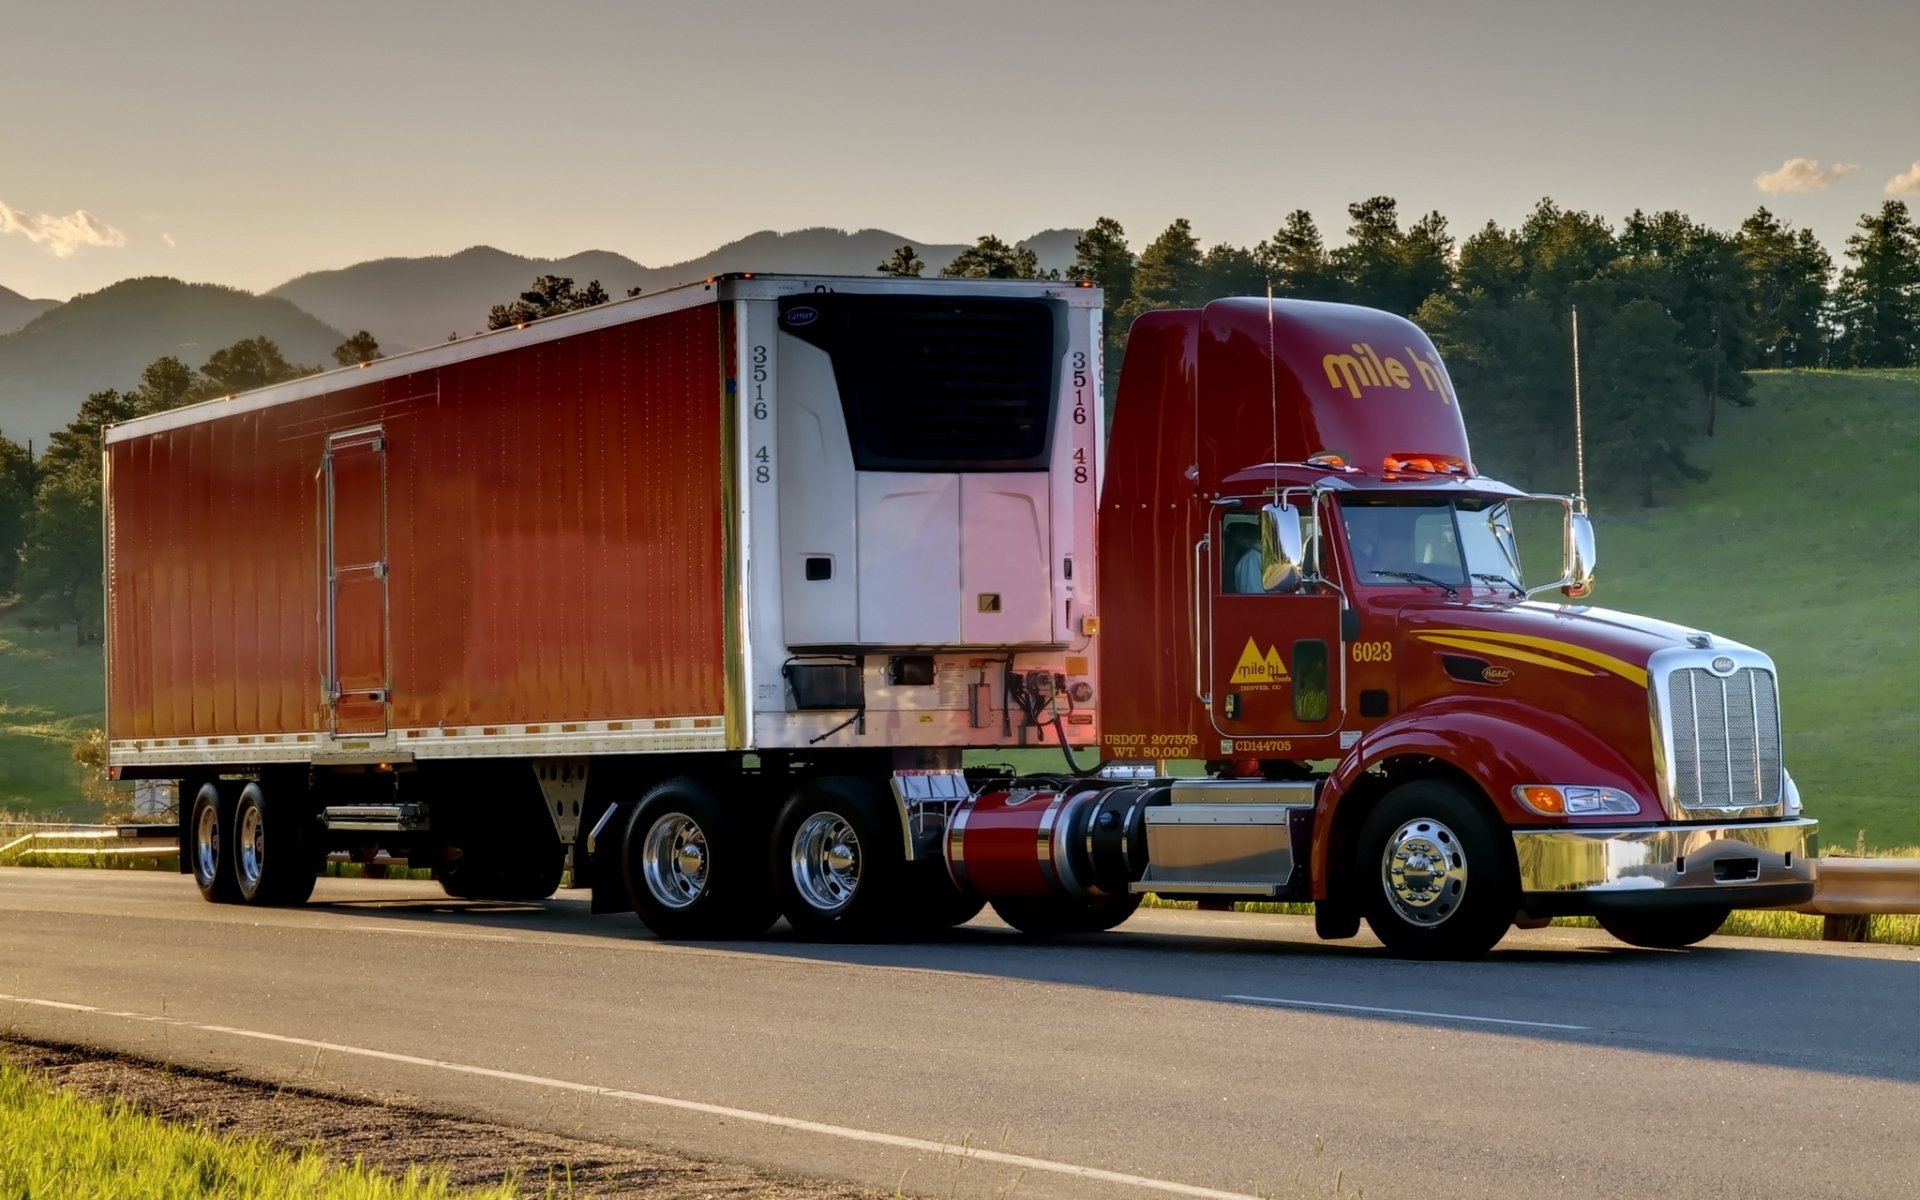 Peterbilt Semi Tractor Transport Truck Wallpapers Hd Desktop And